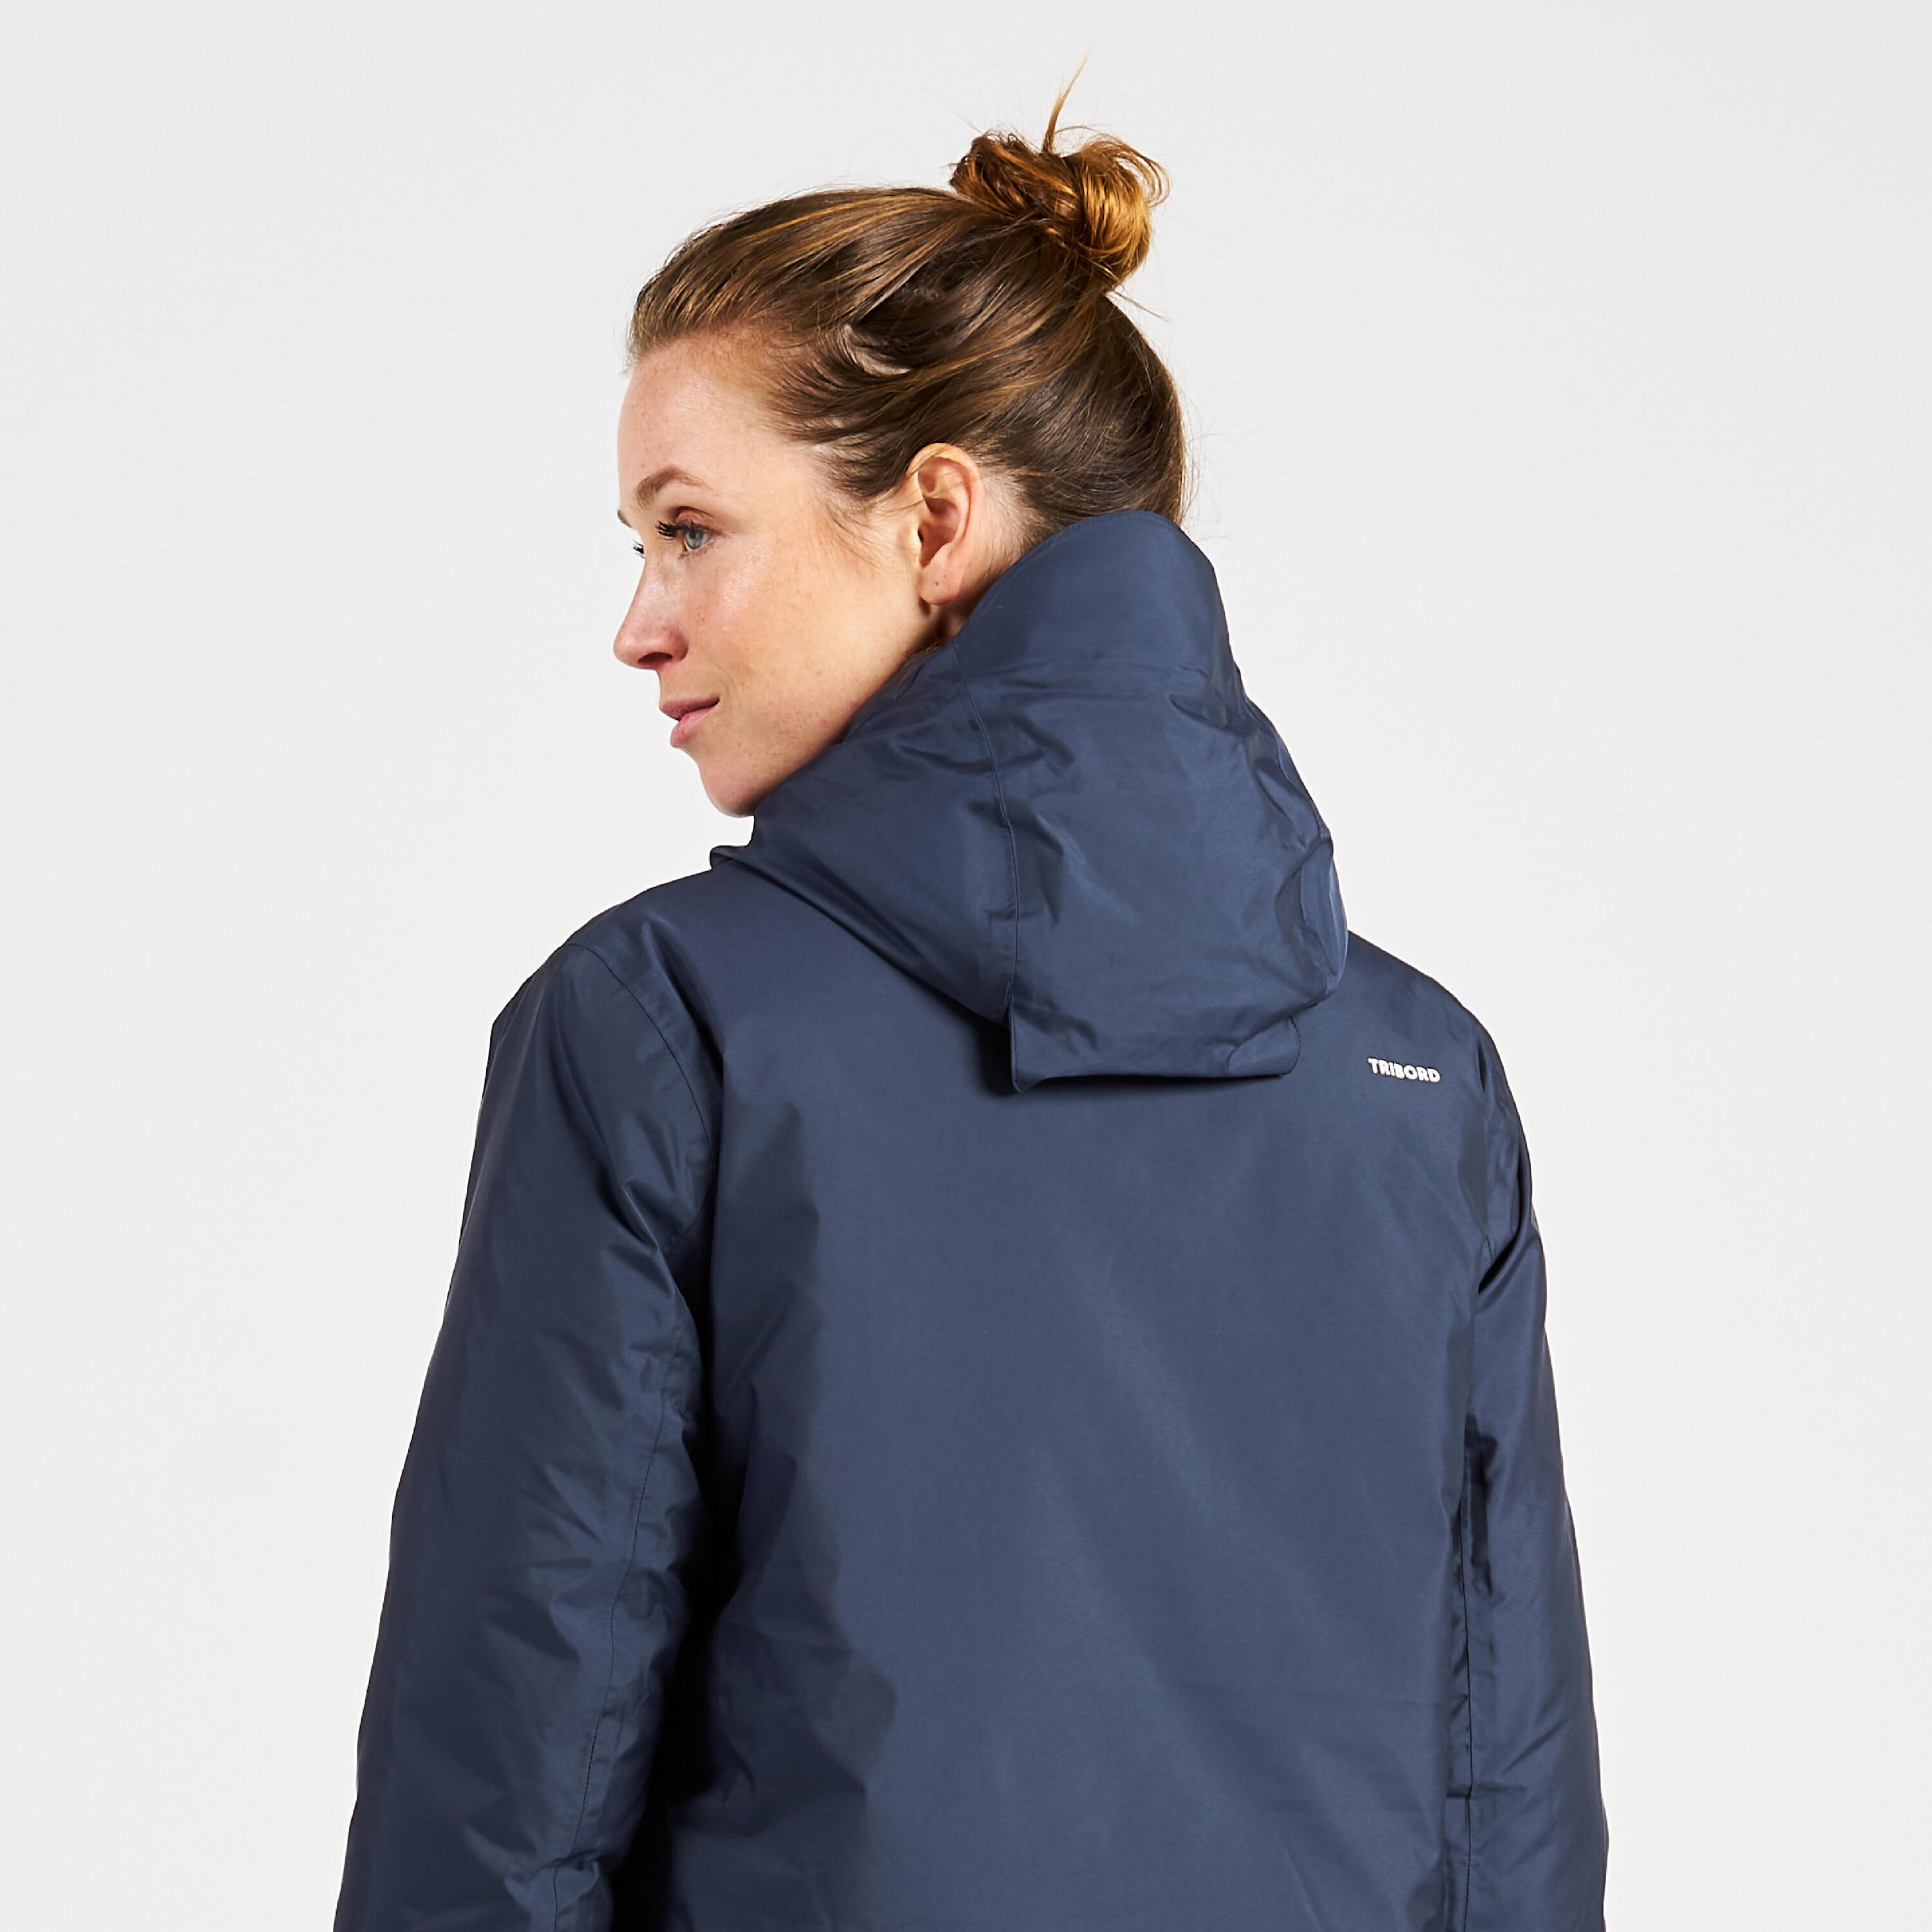 Women's warm waterproof sailing and rain jacket SAILING 100 blue 7/10